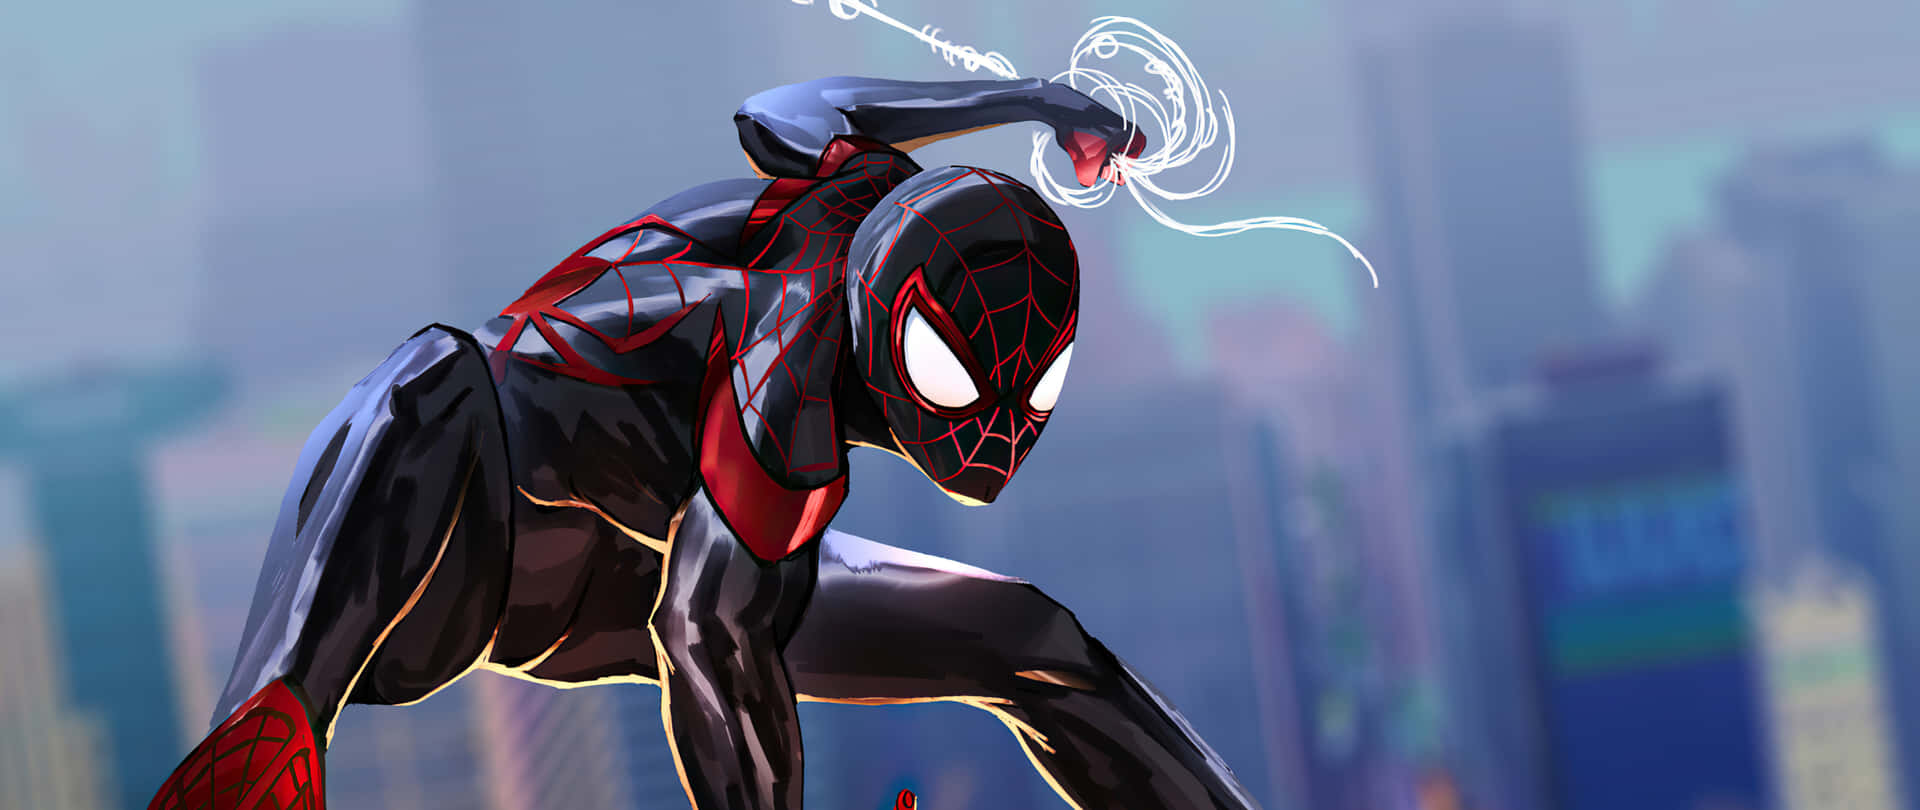 Milesmorales Spider-man Konstverk 2560x1080 Wallpaper